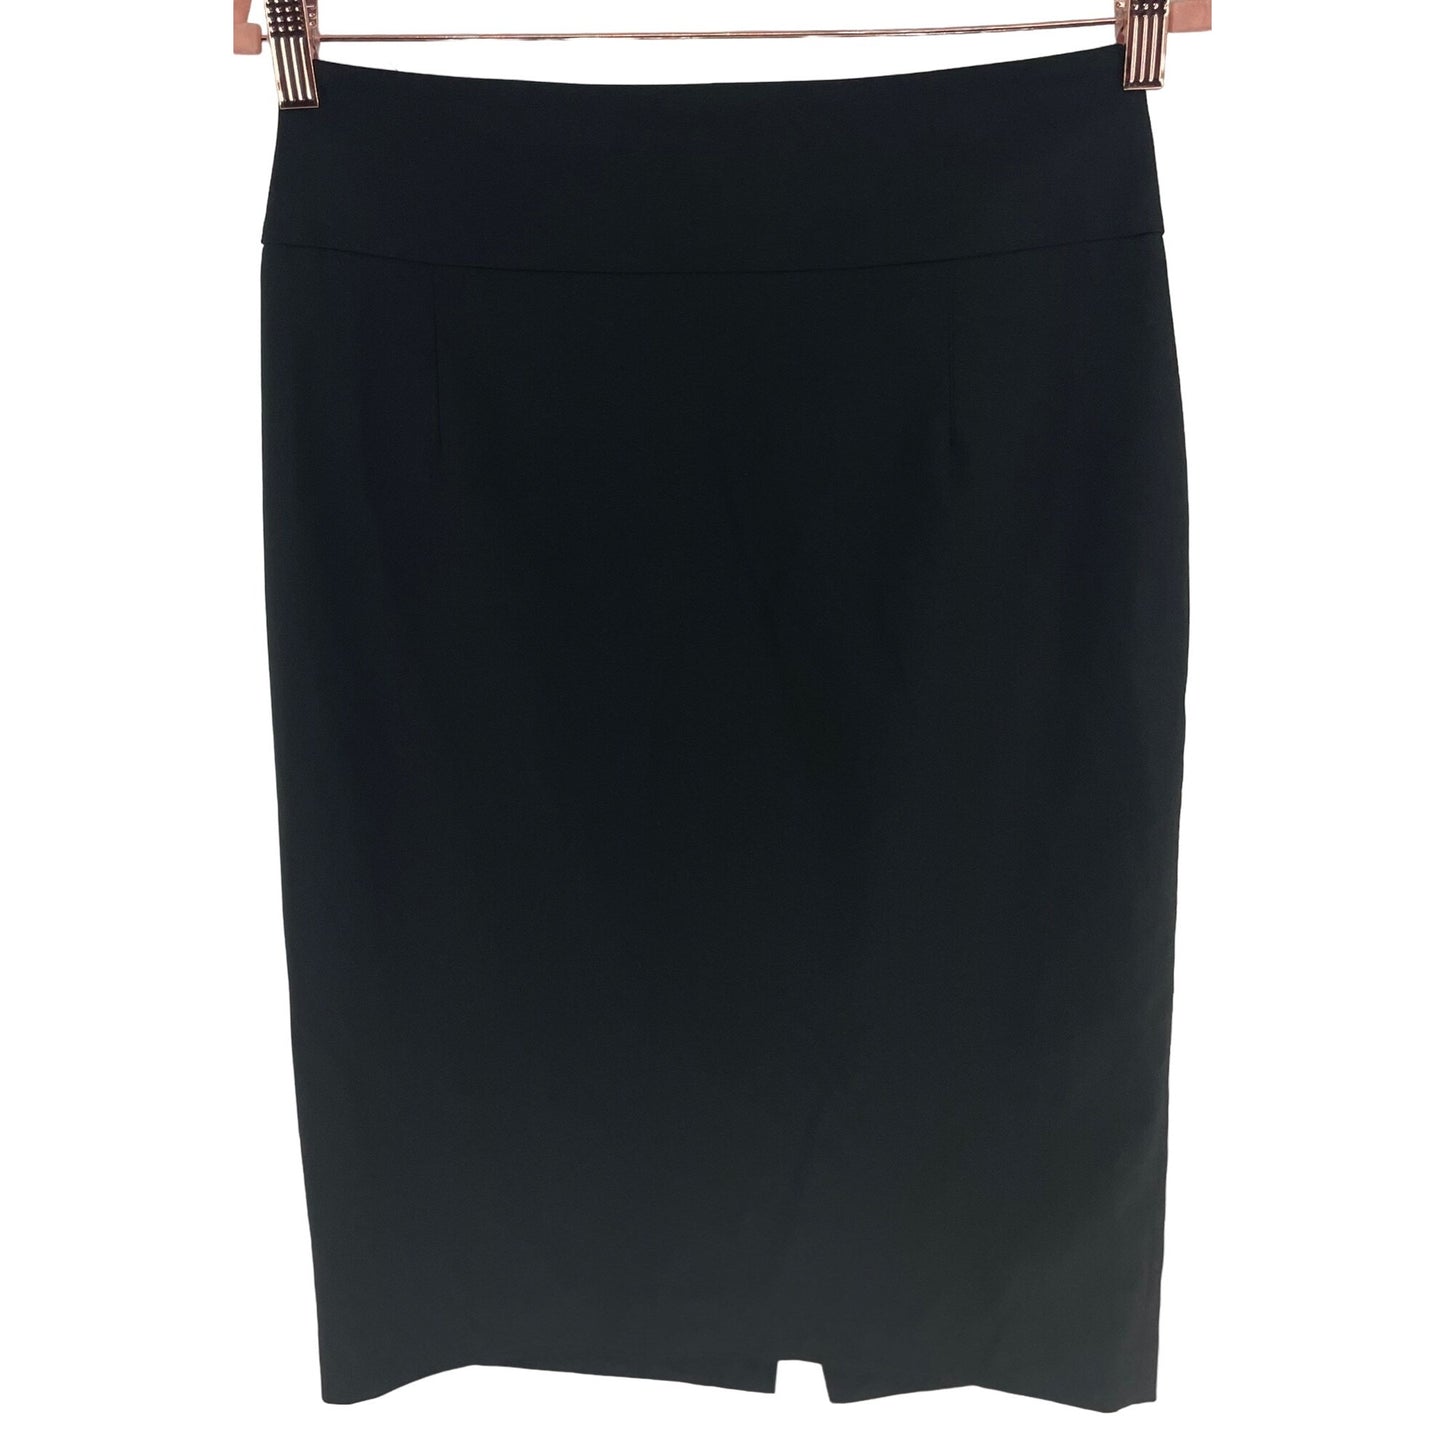 Mossimo Women's Size 4 Black Pencil Skirt